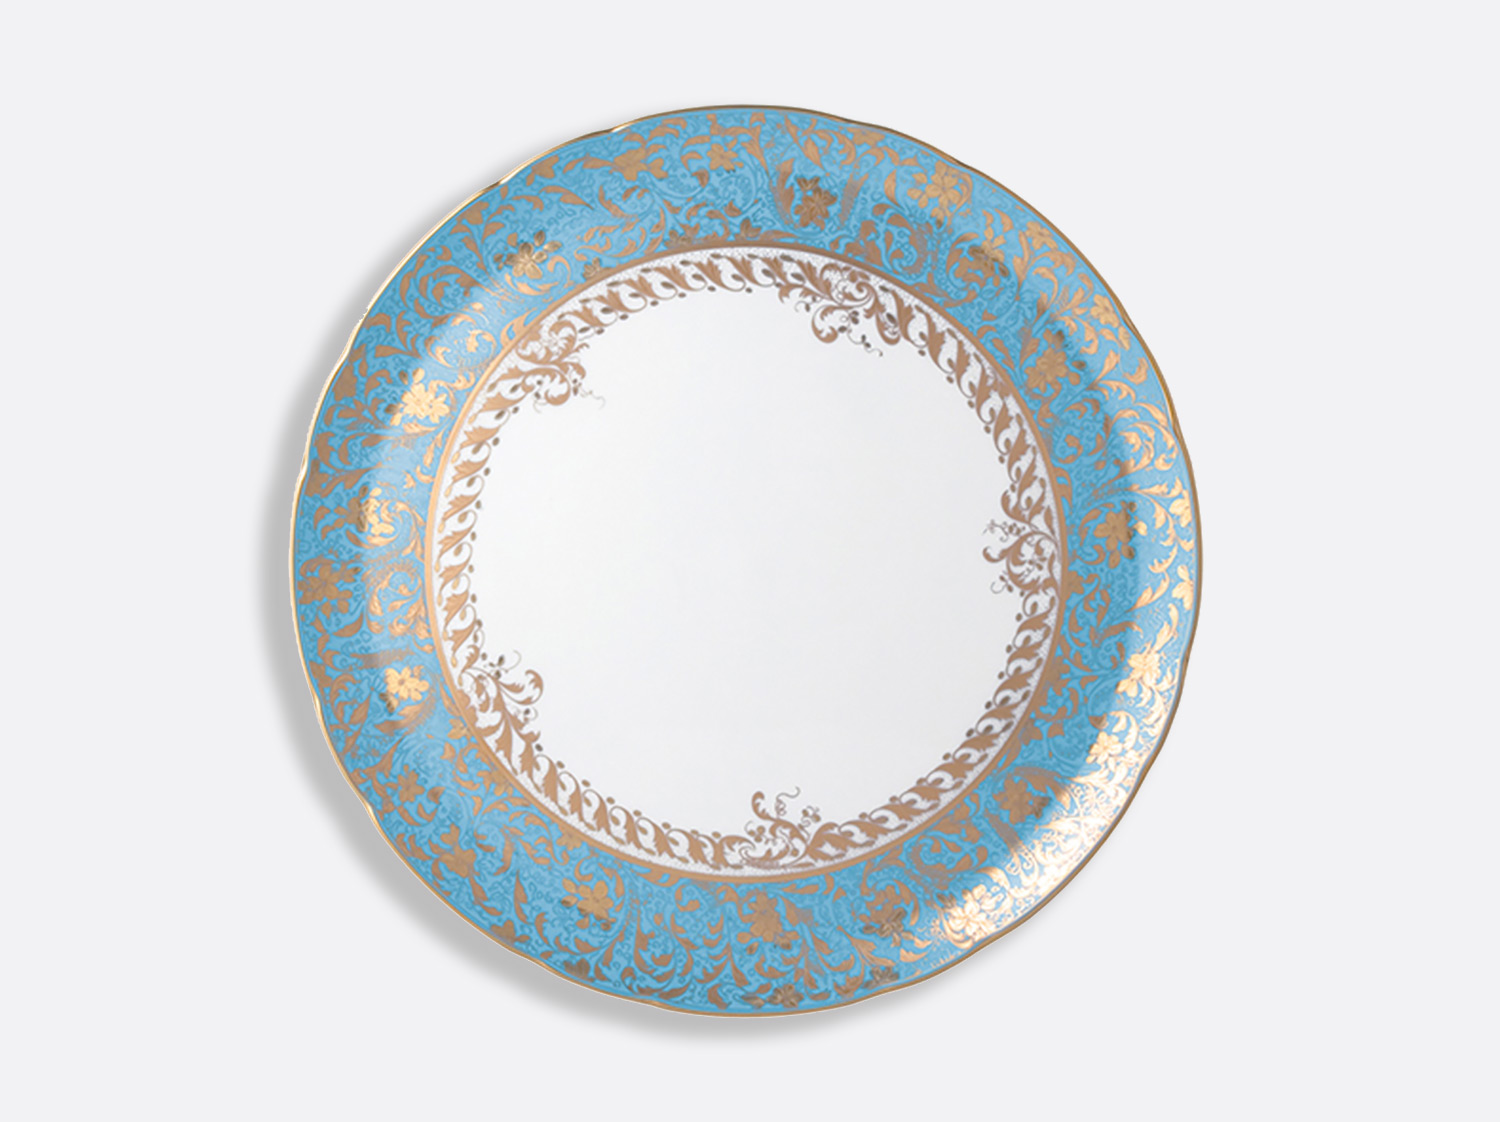 China Deep round dish 11.5" of the collection Eden turquoise | Bernardaud